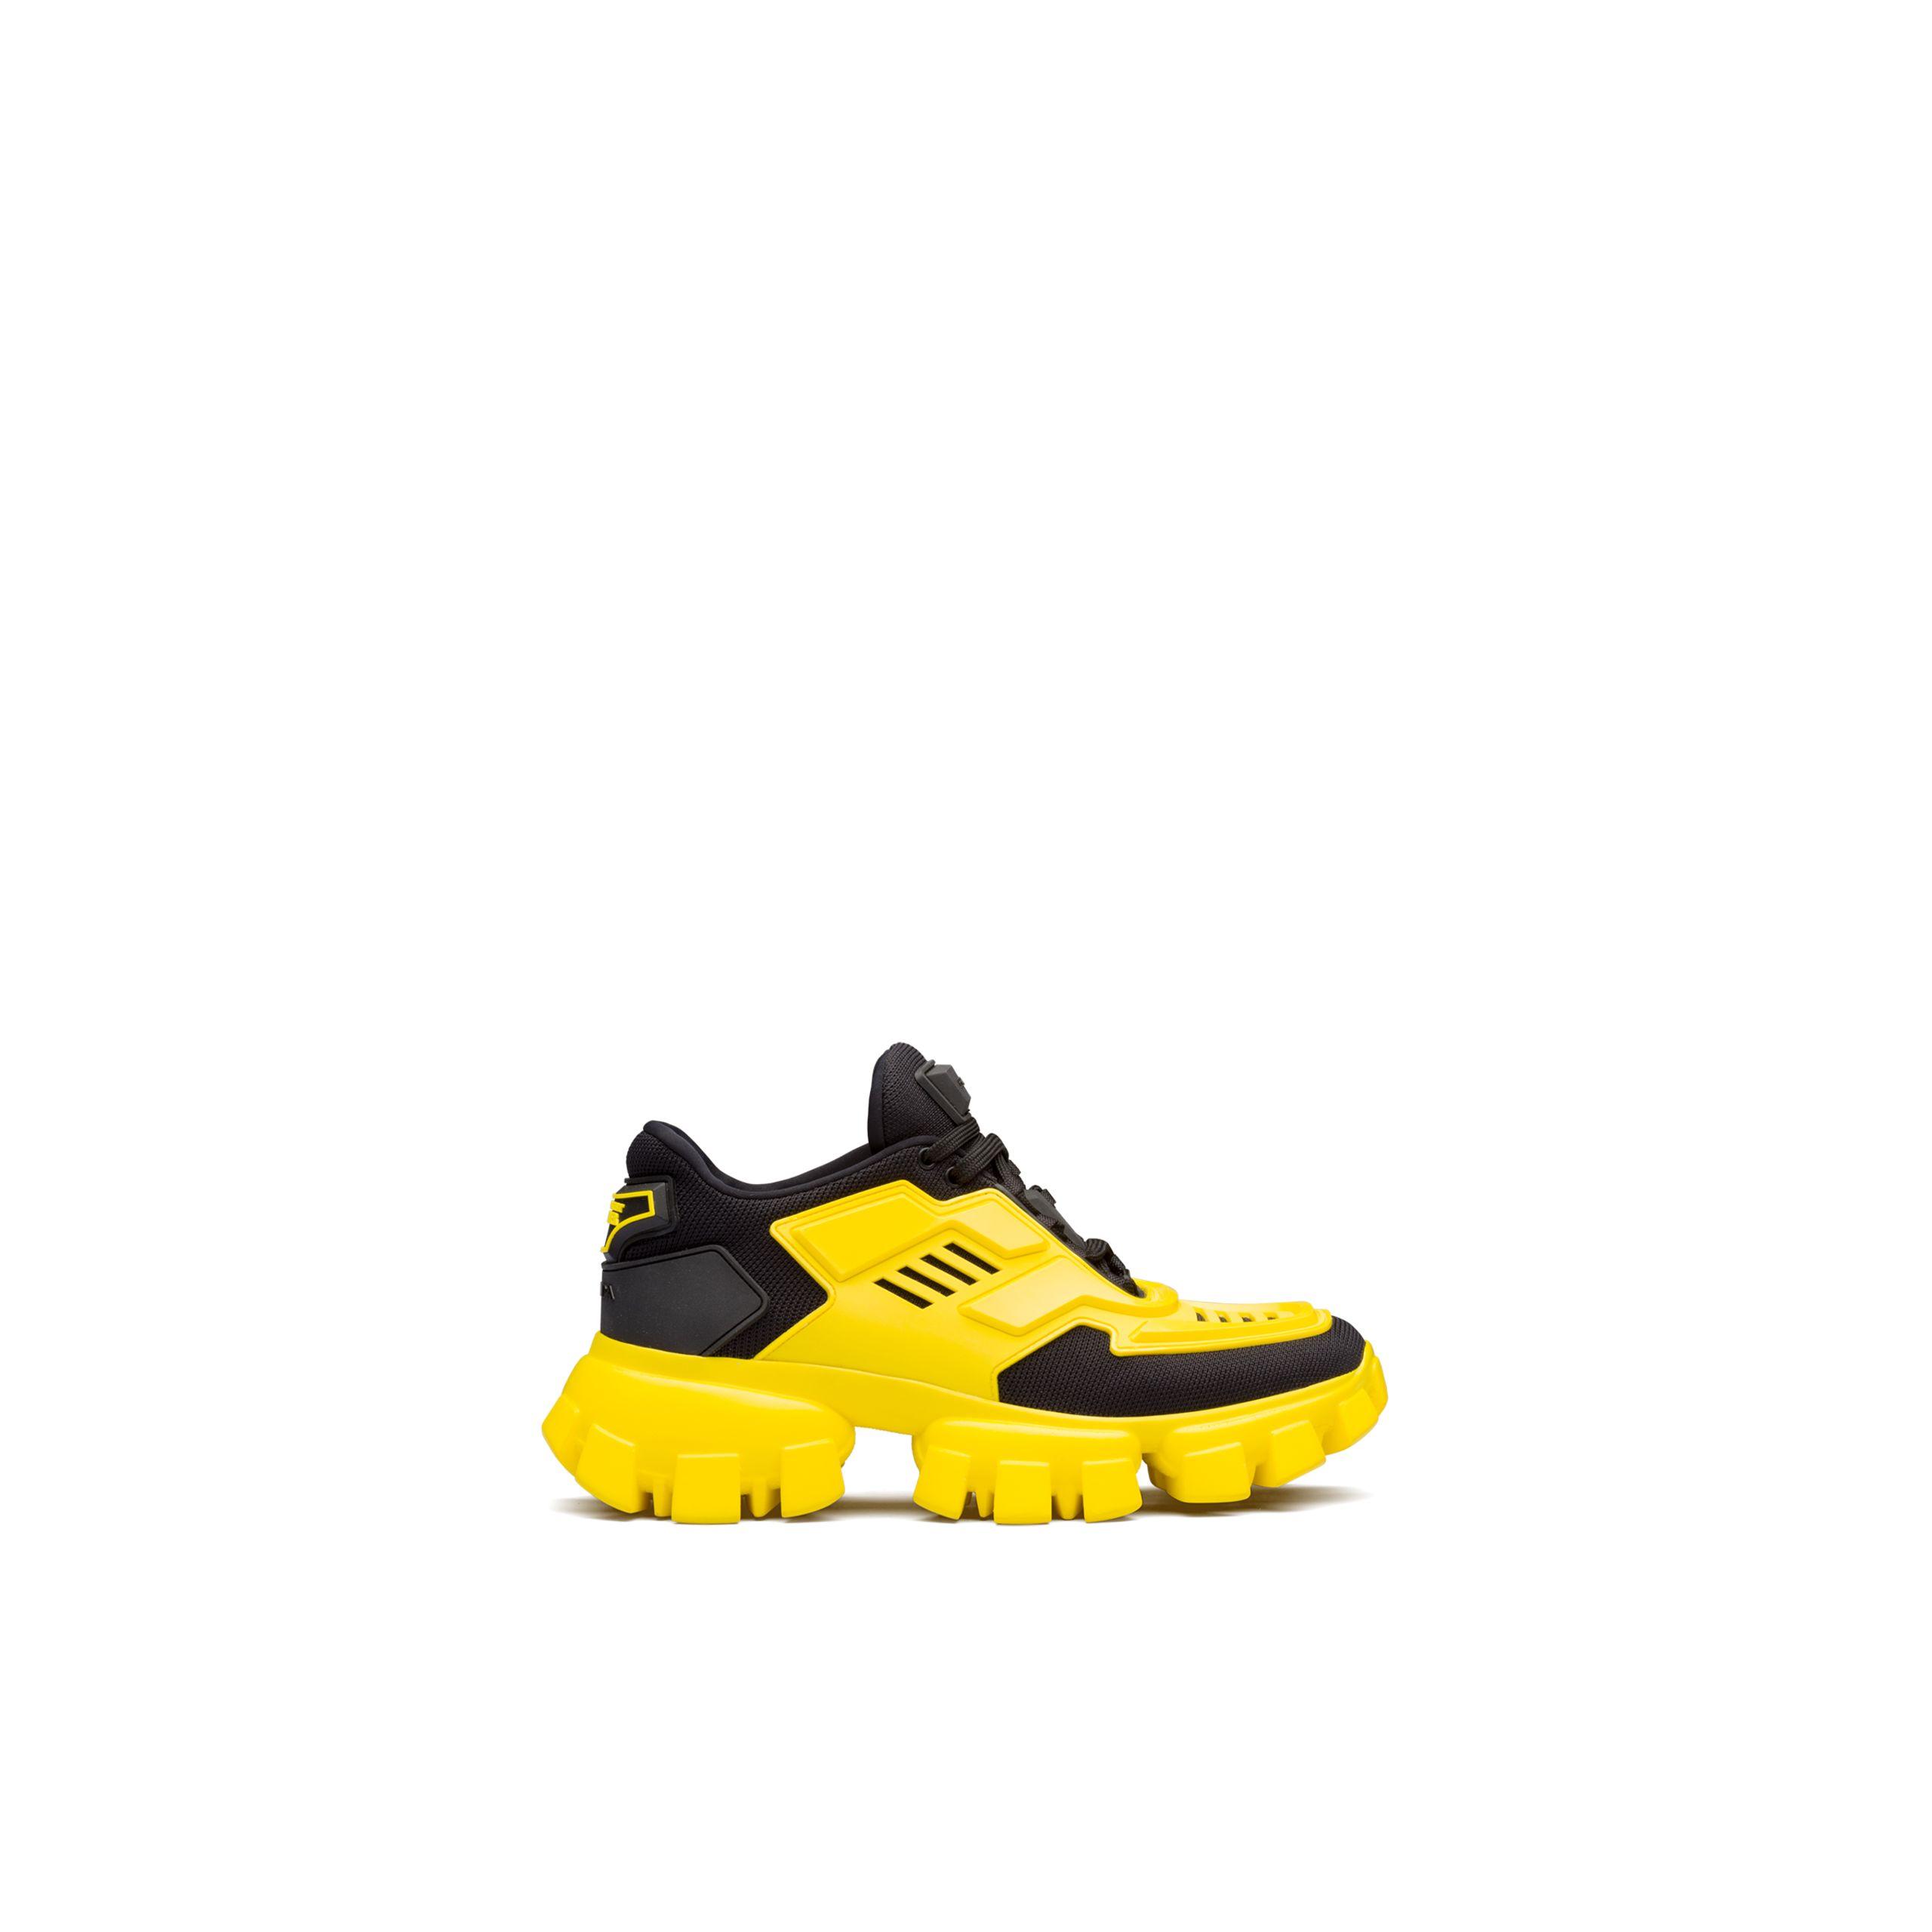 Prada Rubber Cloudbust Thunder Sneakers in Black Yellow (Yellow) - Lyst